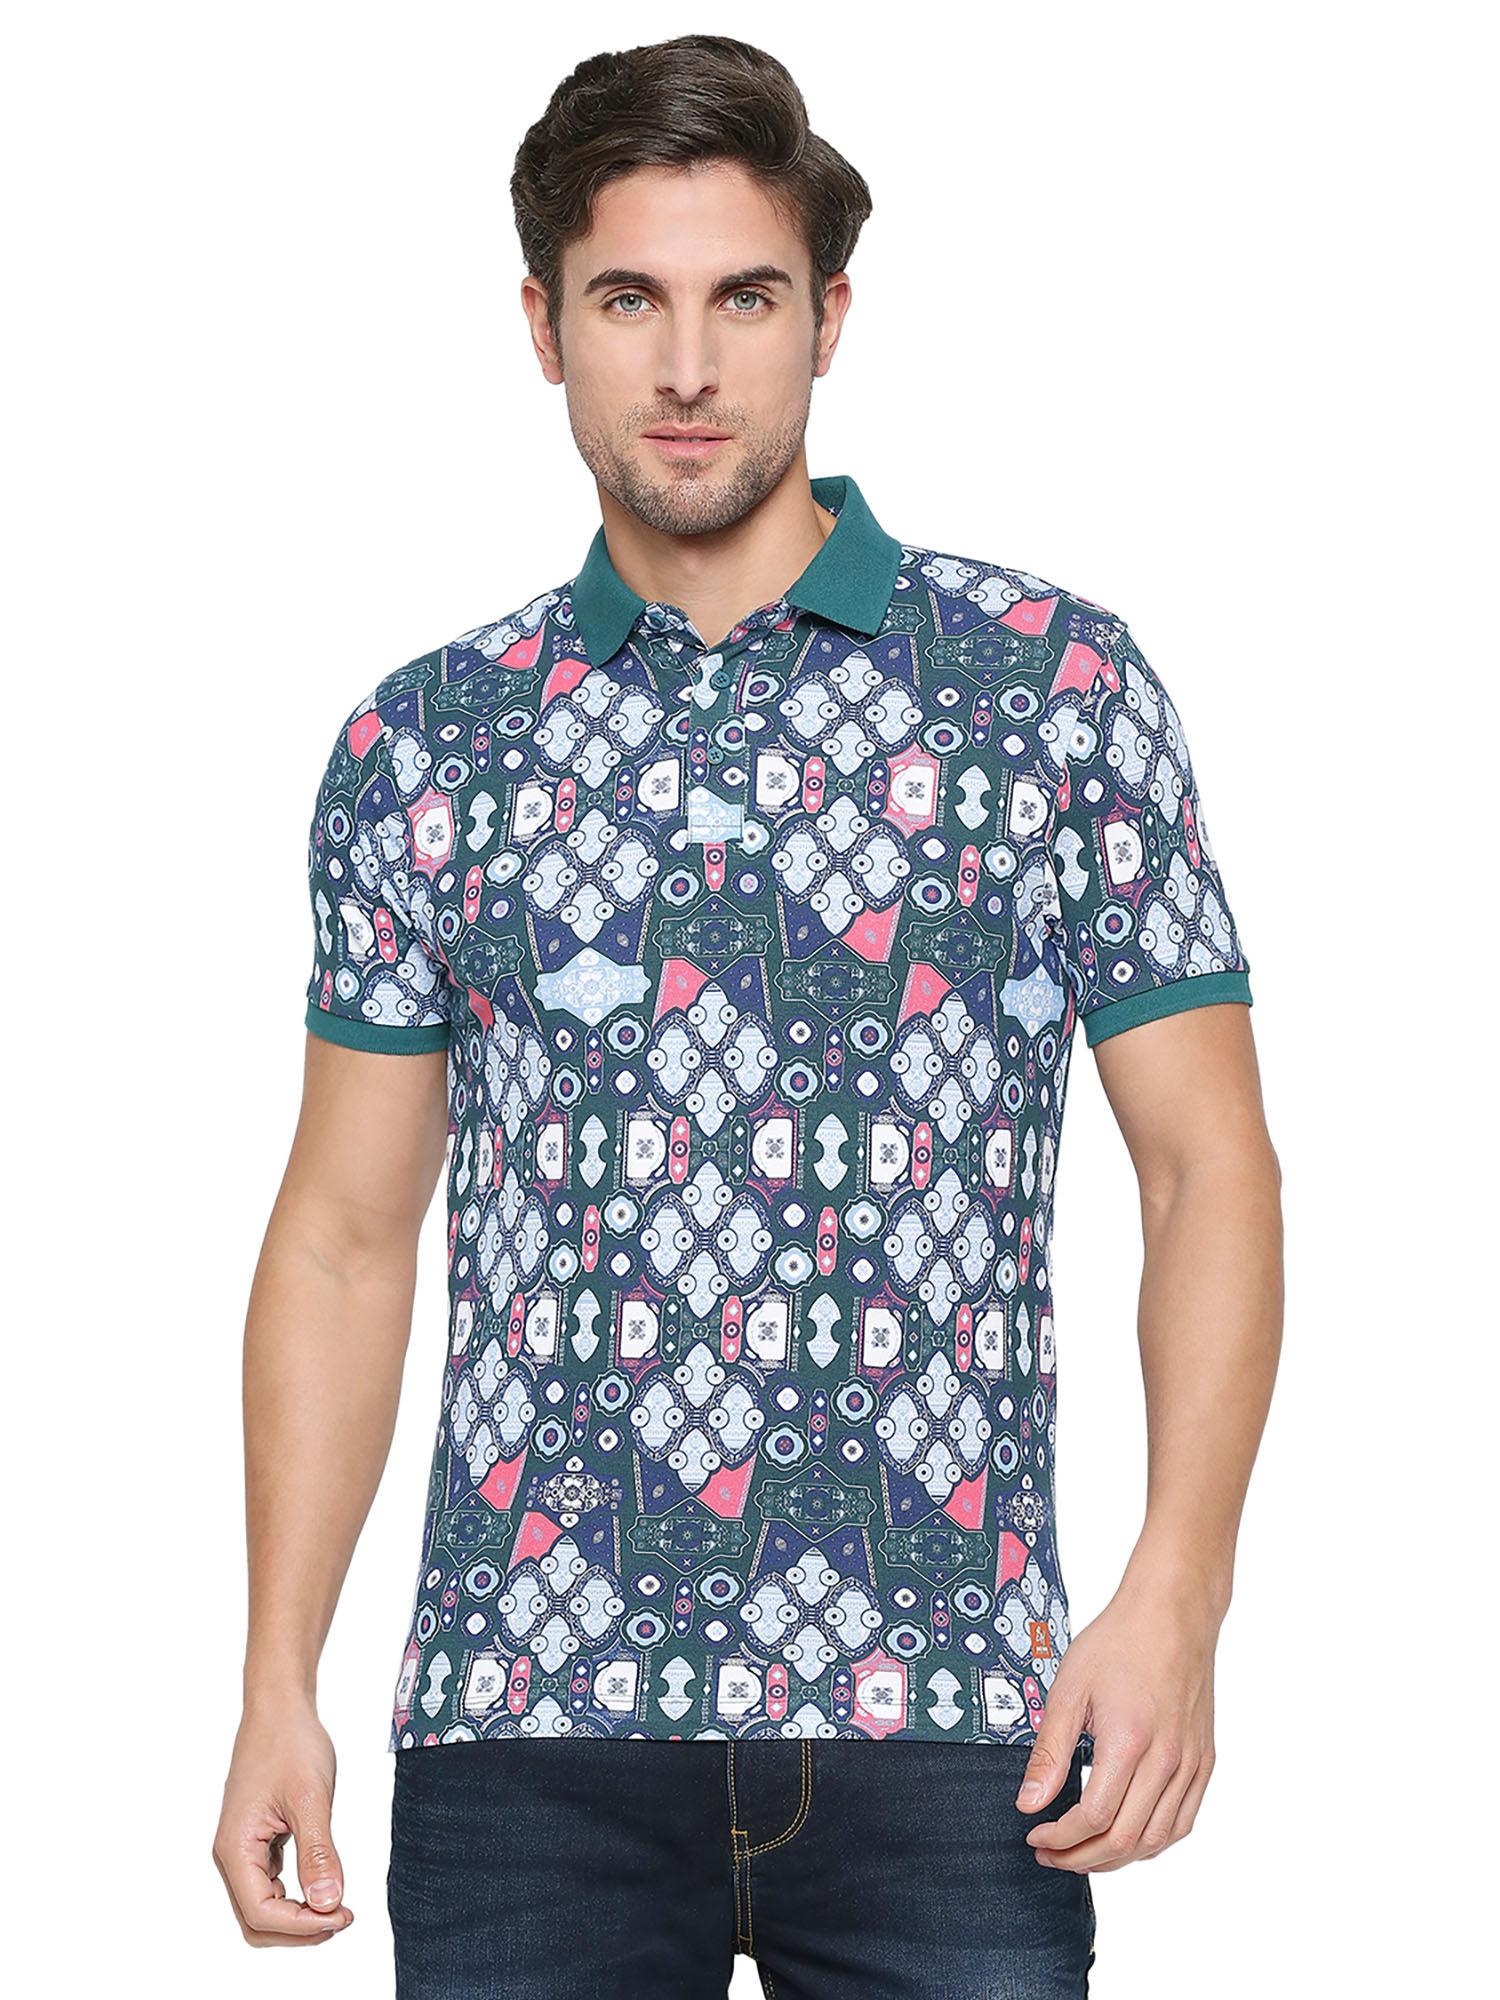 men-half-sleeves-teal-printed-polo-t-shirt